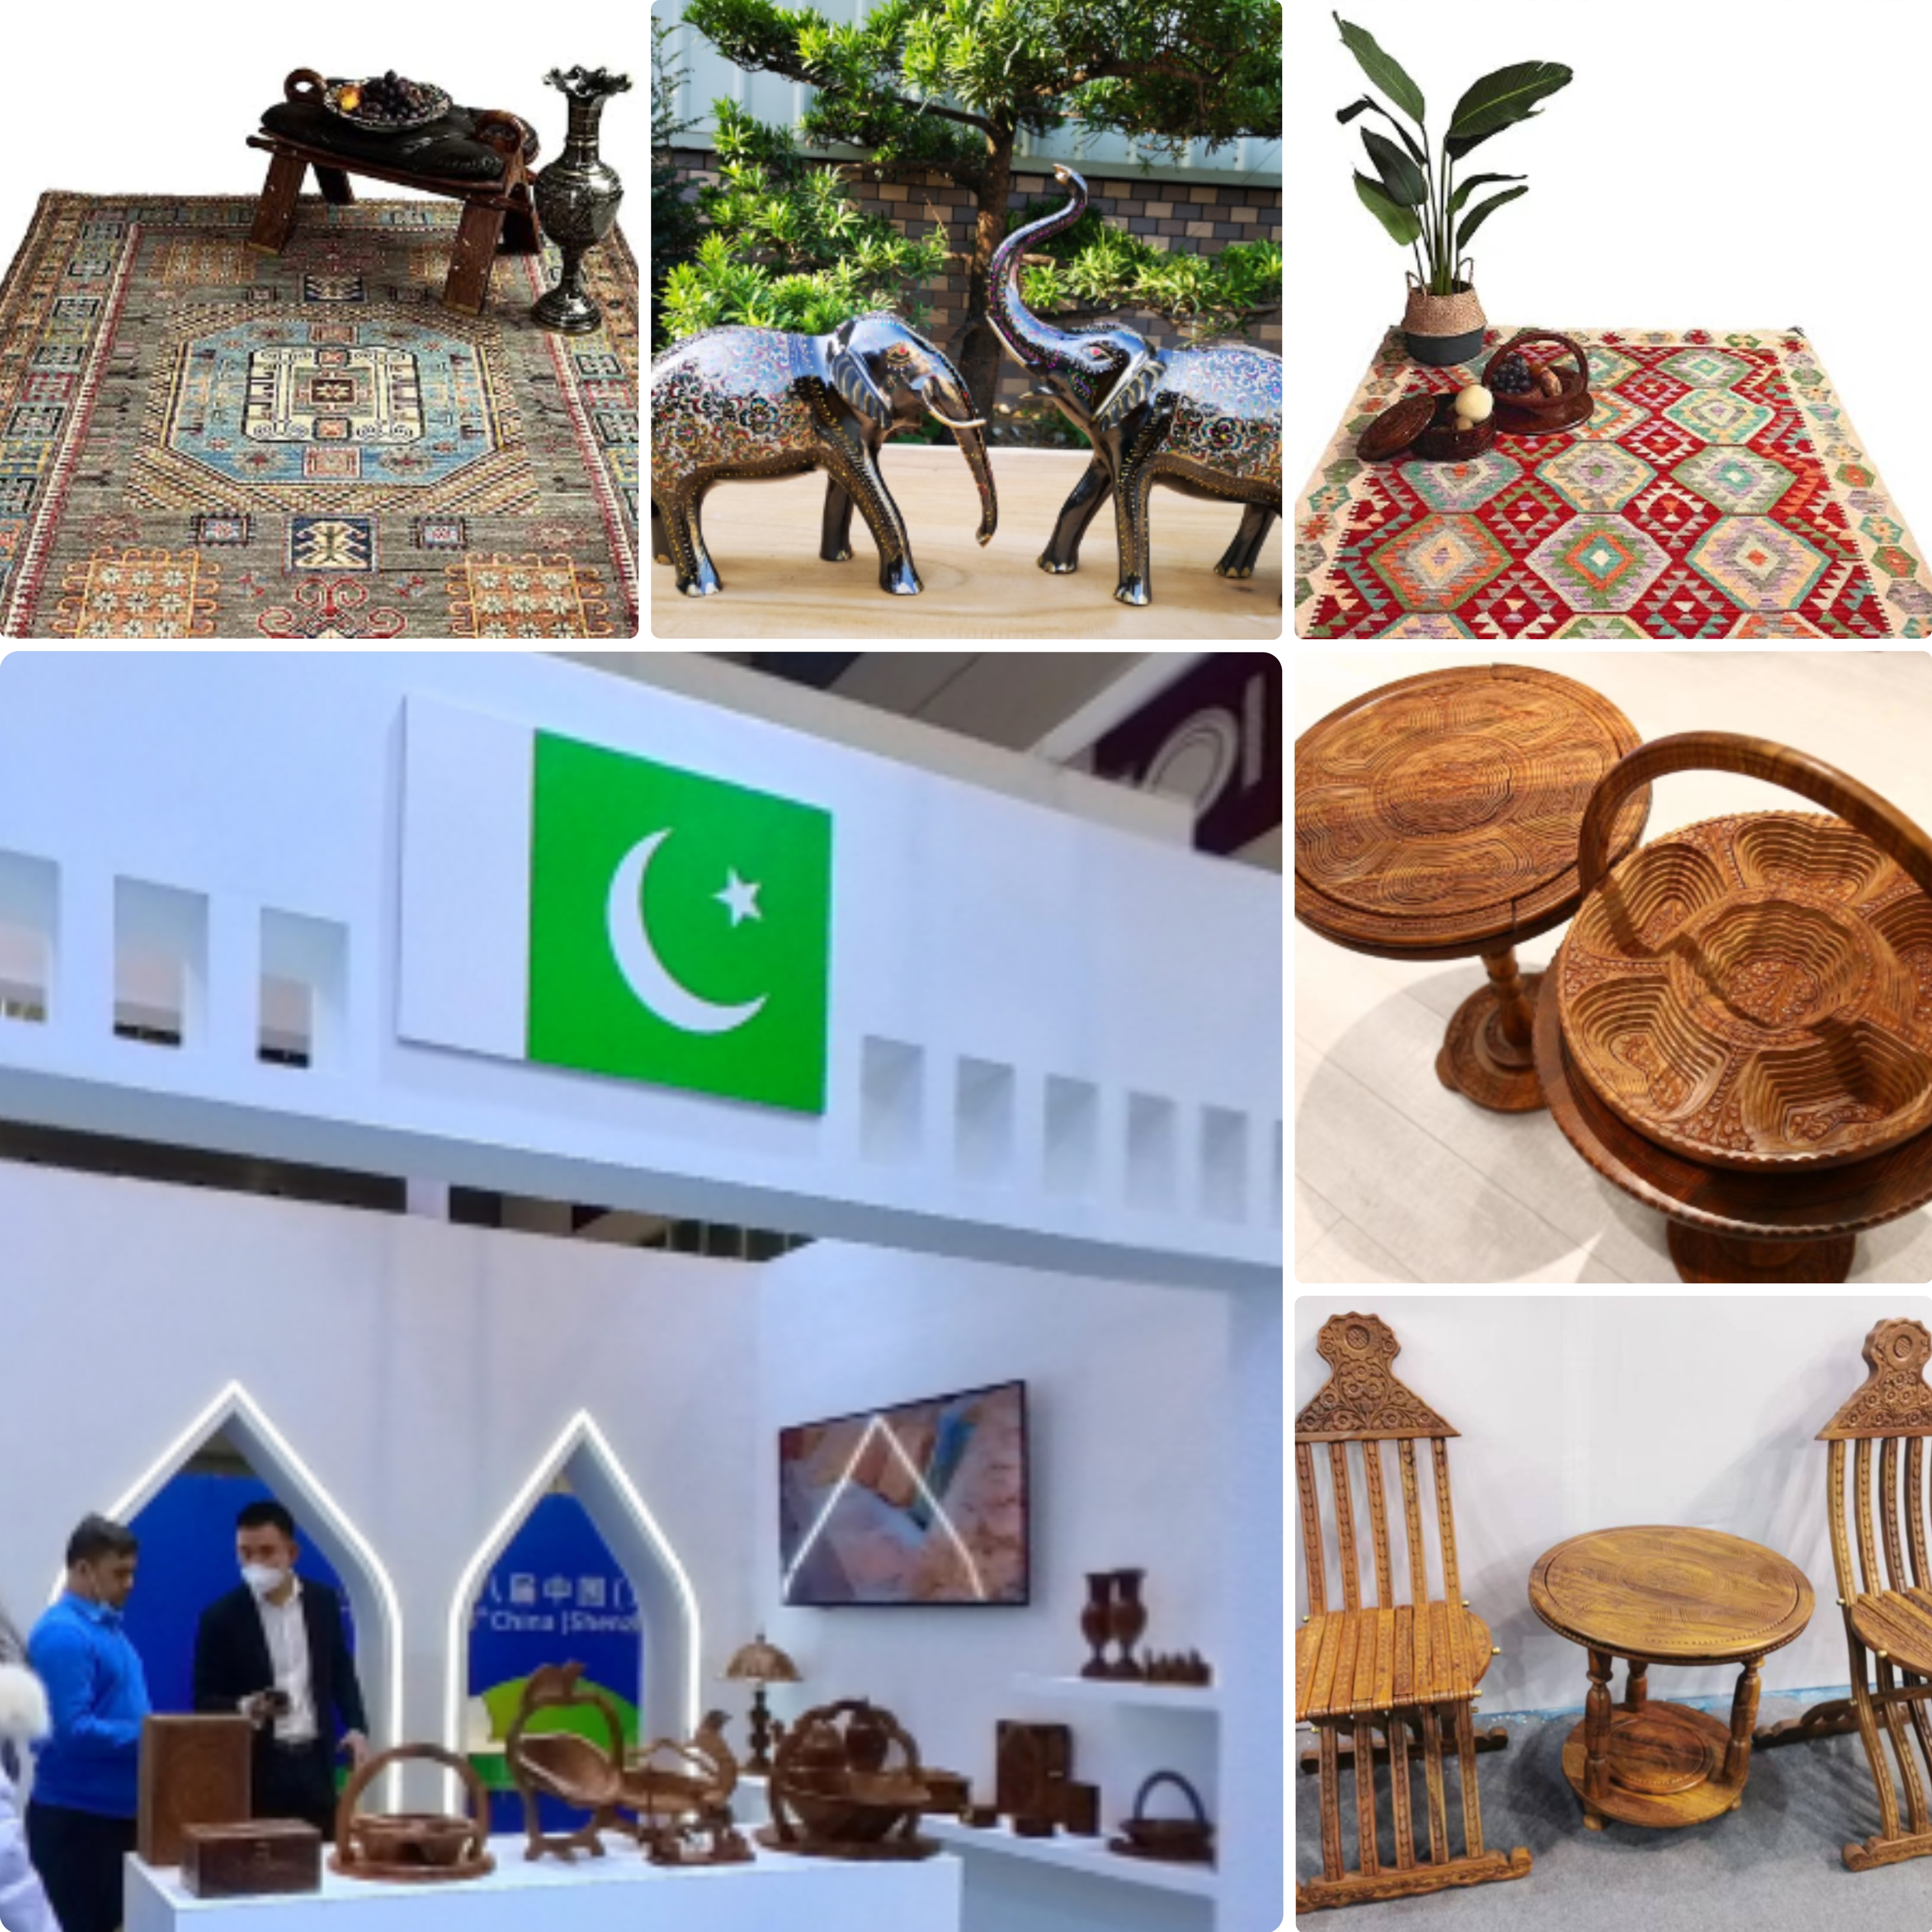 Pakistani handicrafts shine at int'l cultural industries fair in China